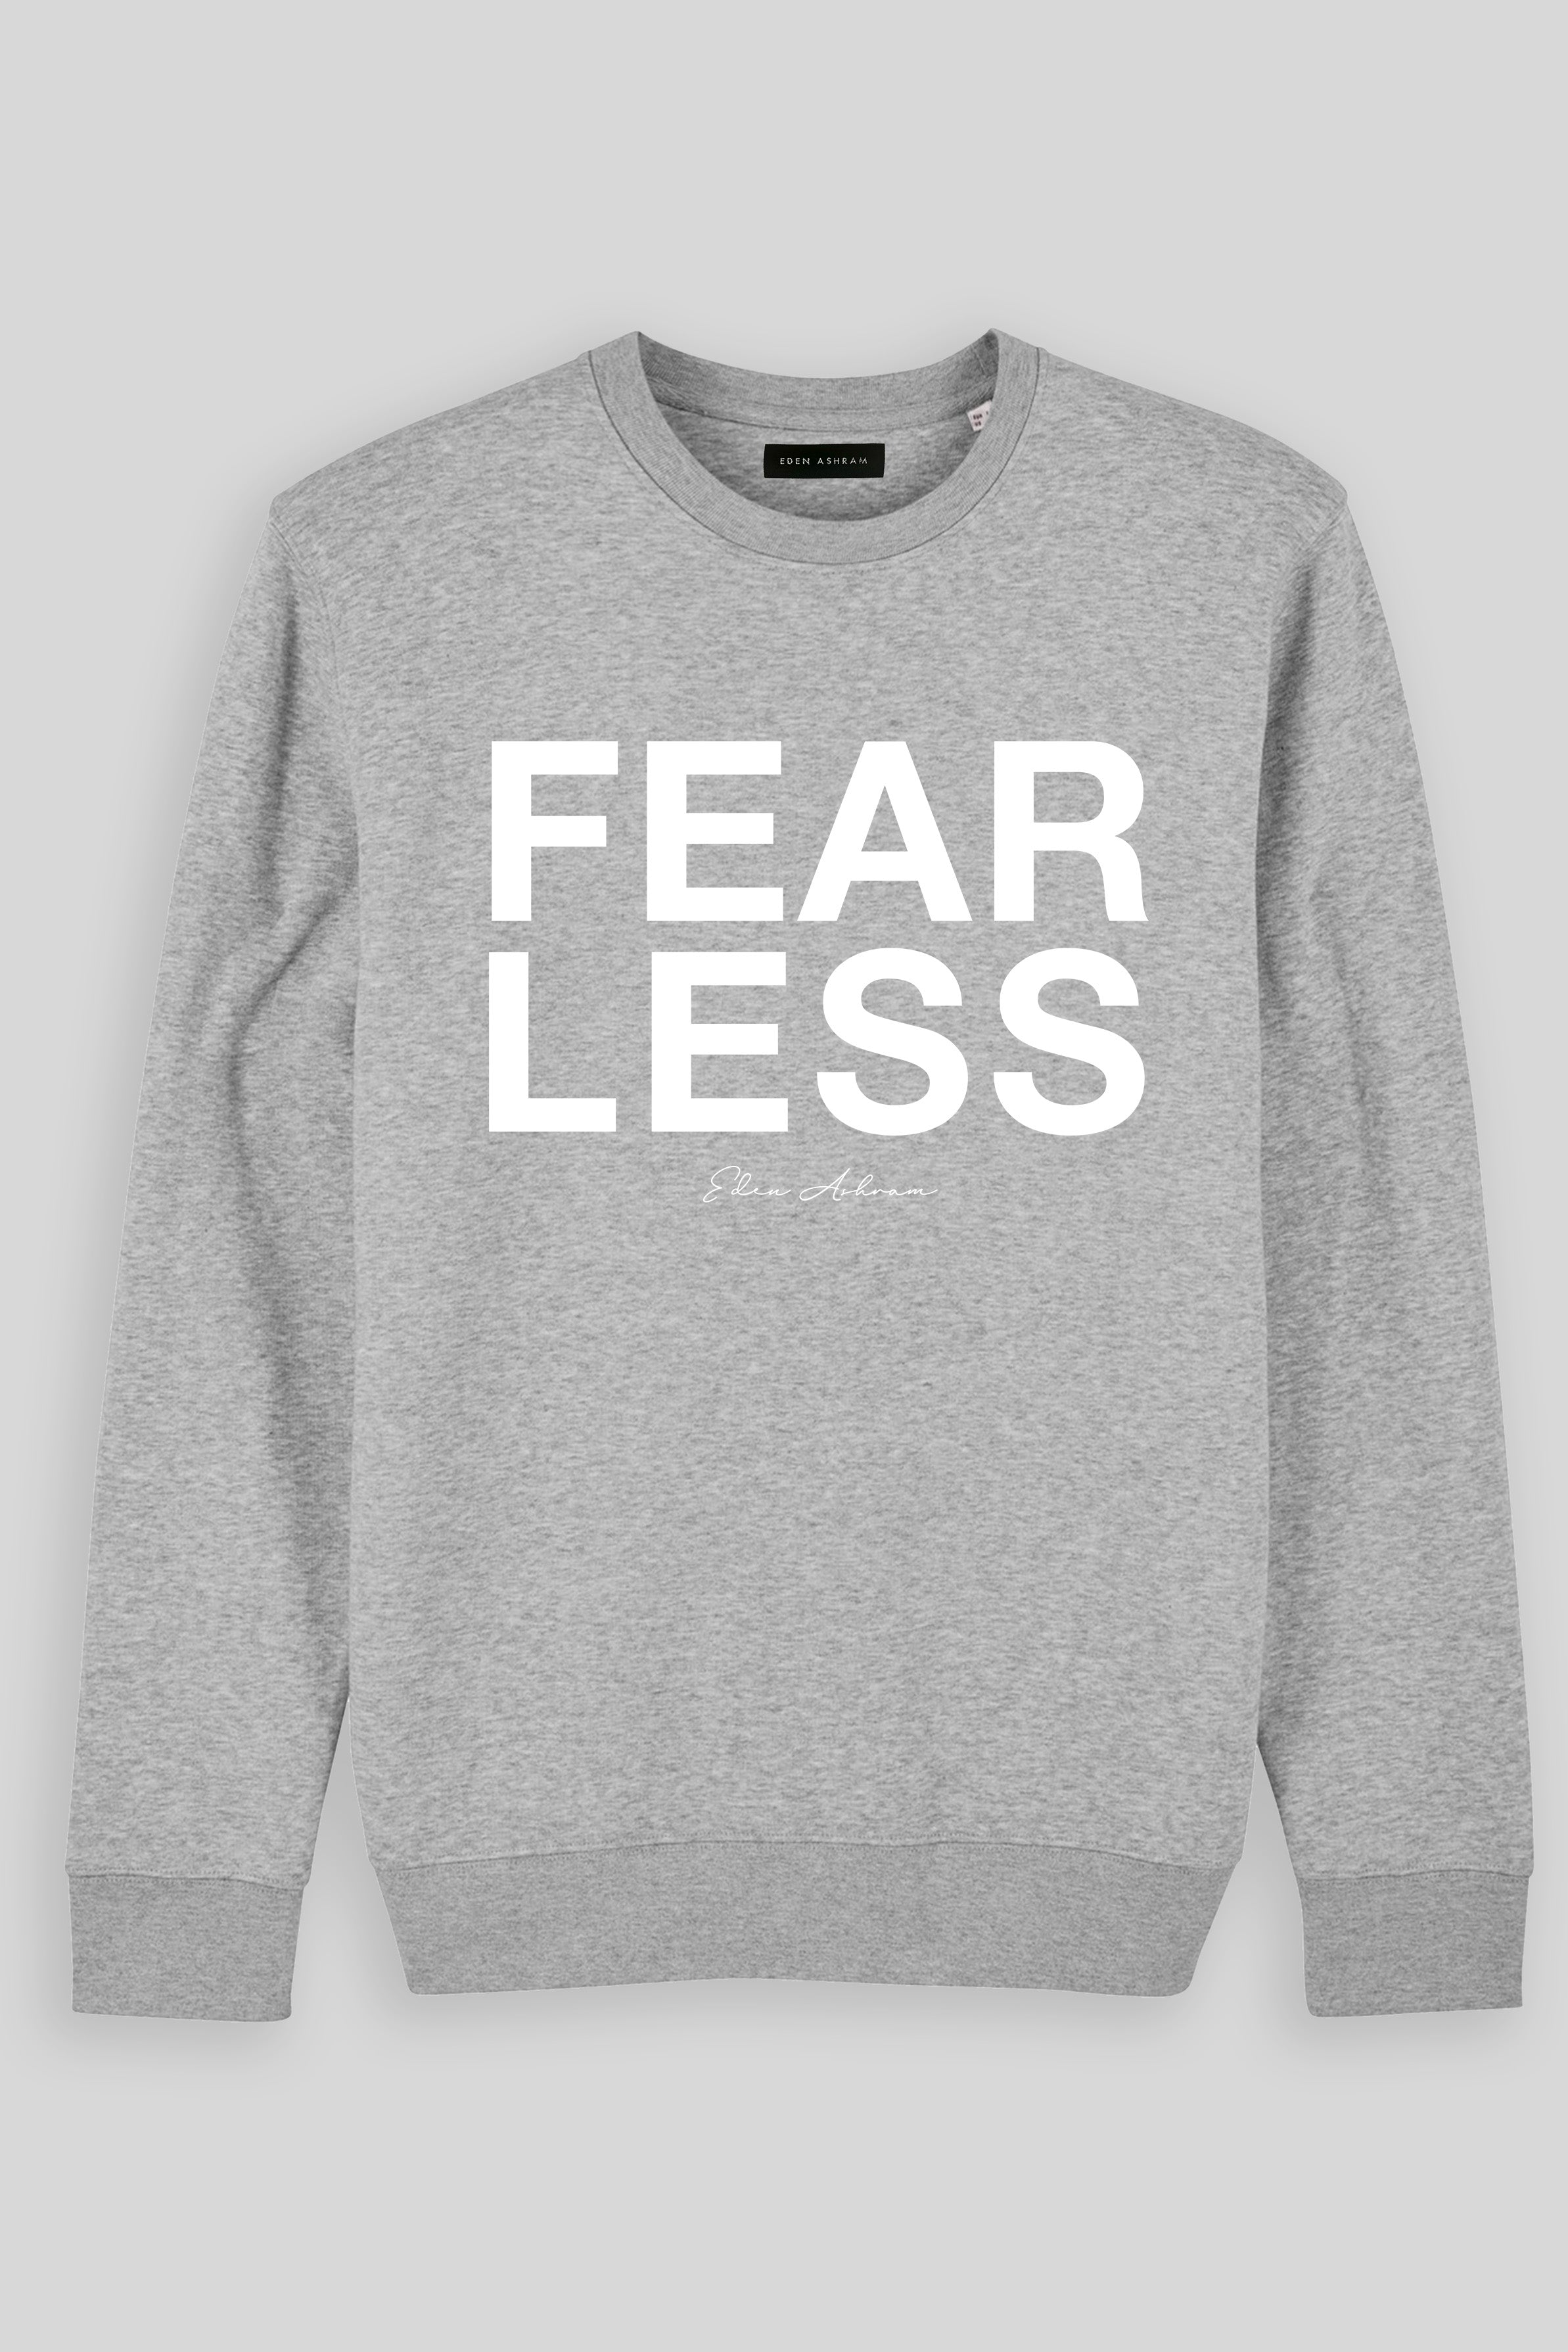 Eden Ashram Fear Less Premium Crew Neck Sweatshirt Heather Grey